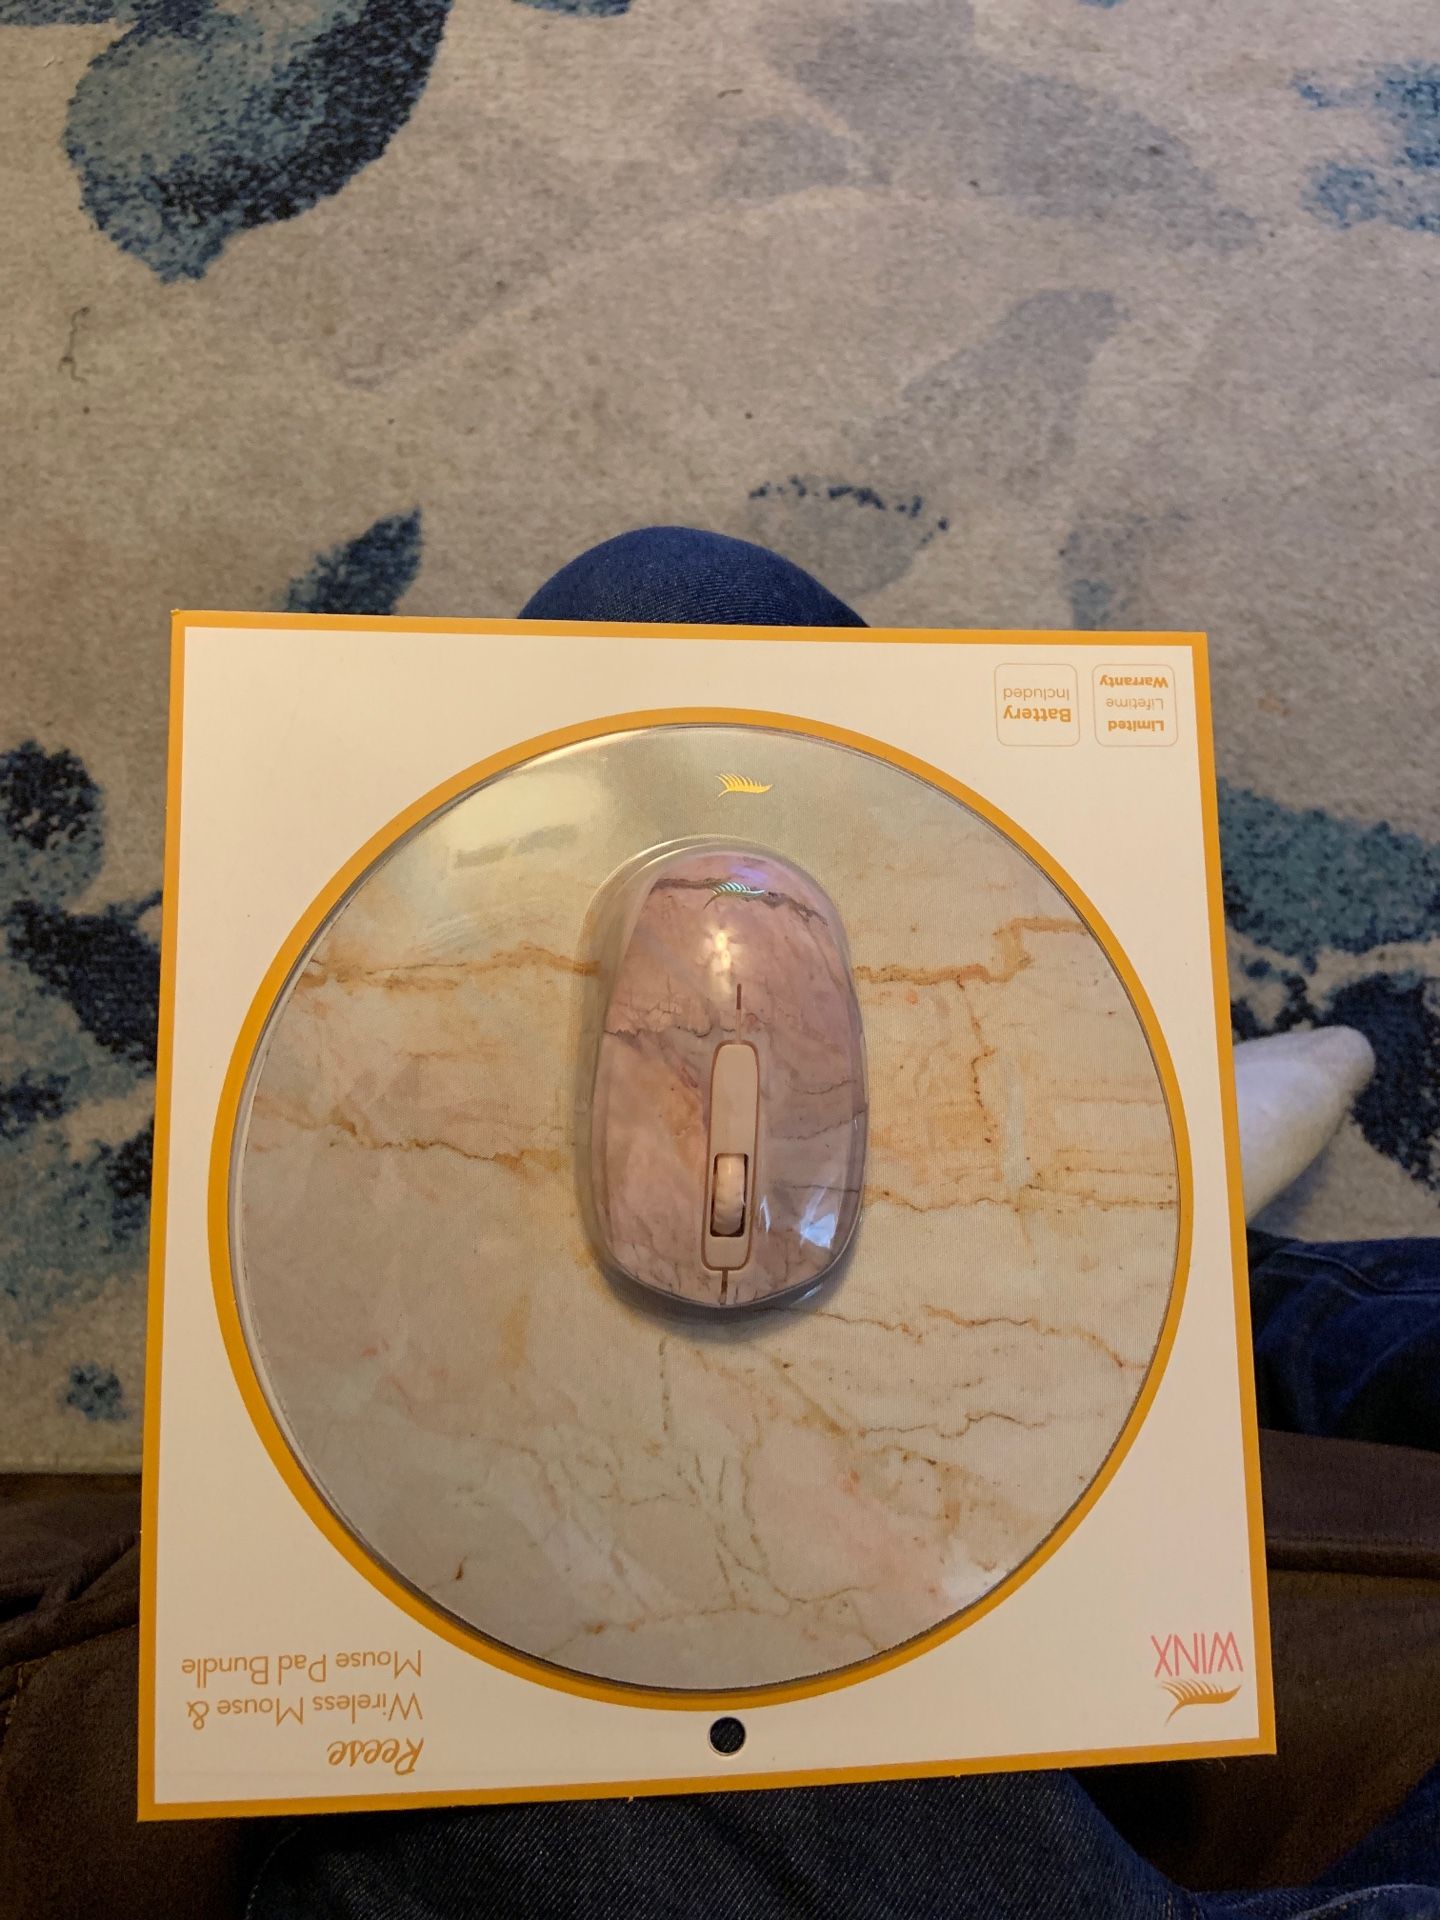 Wireless mouse mouse pad bundle